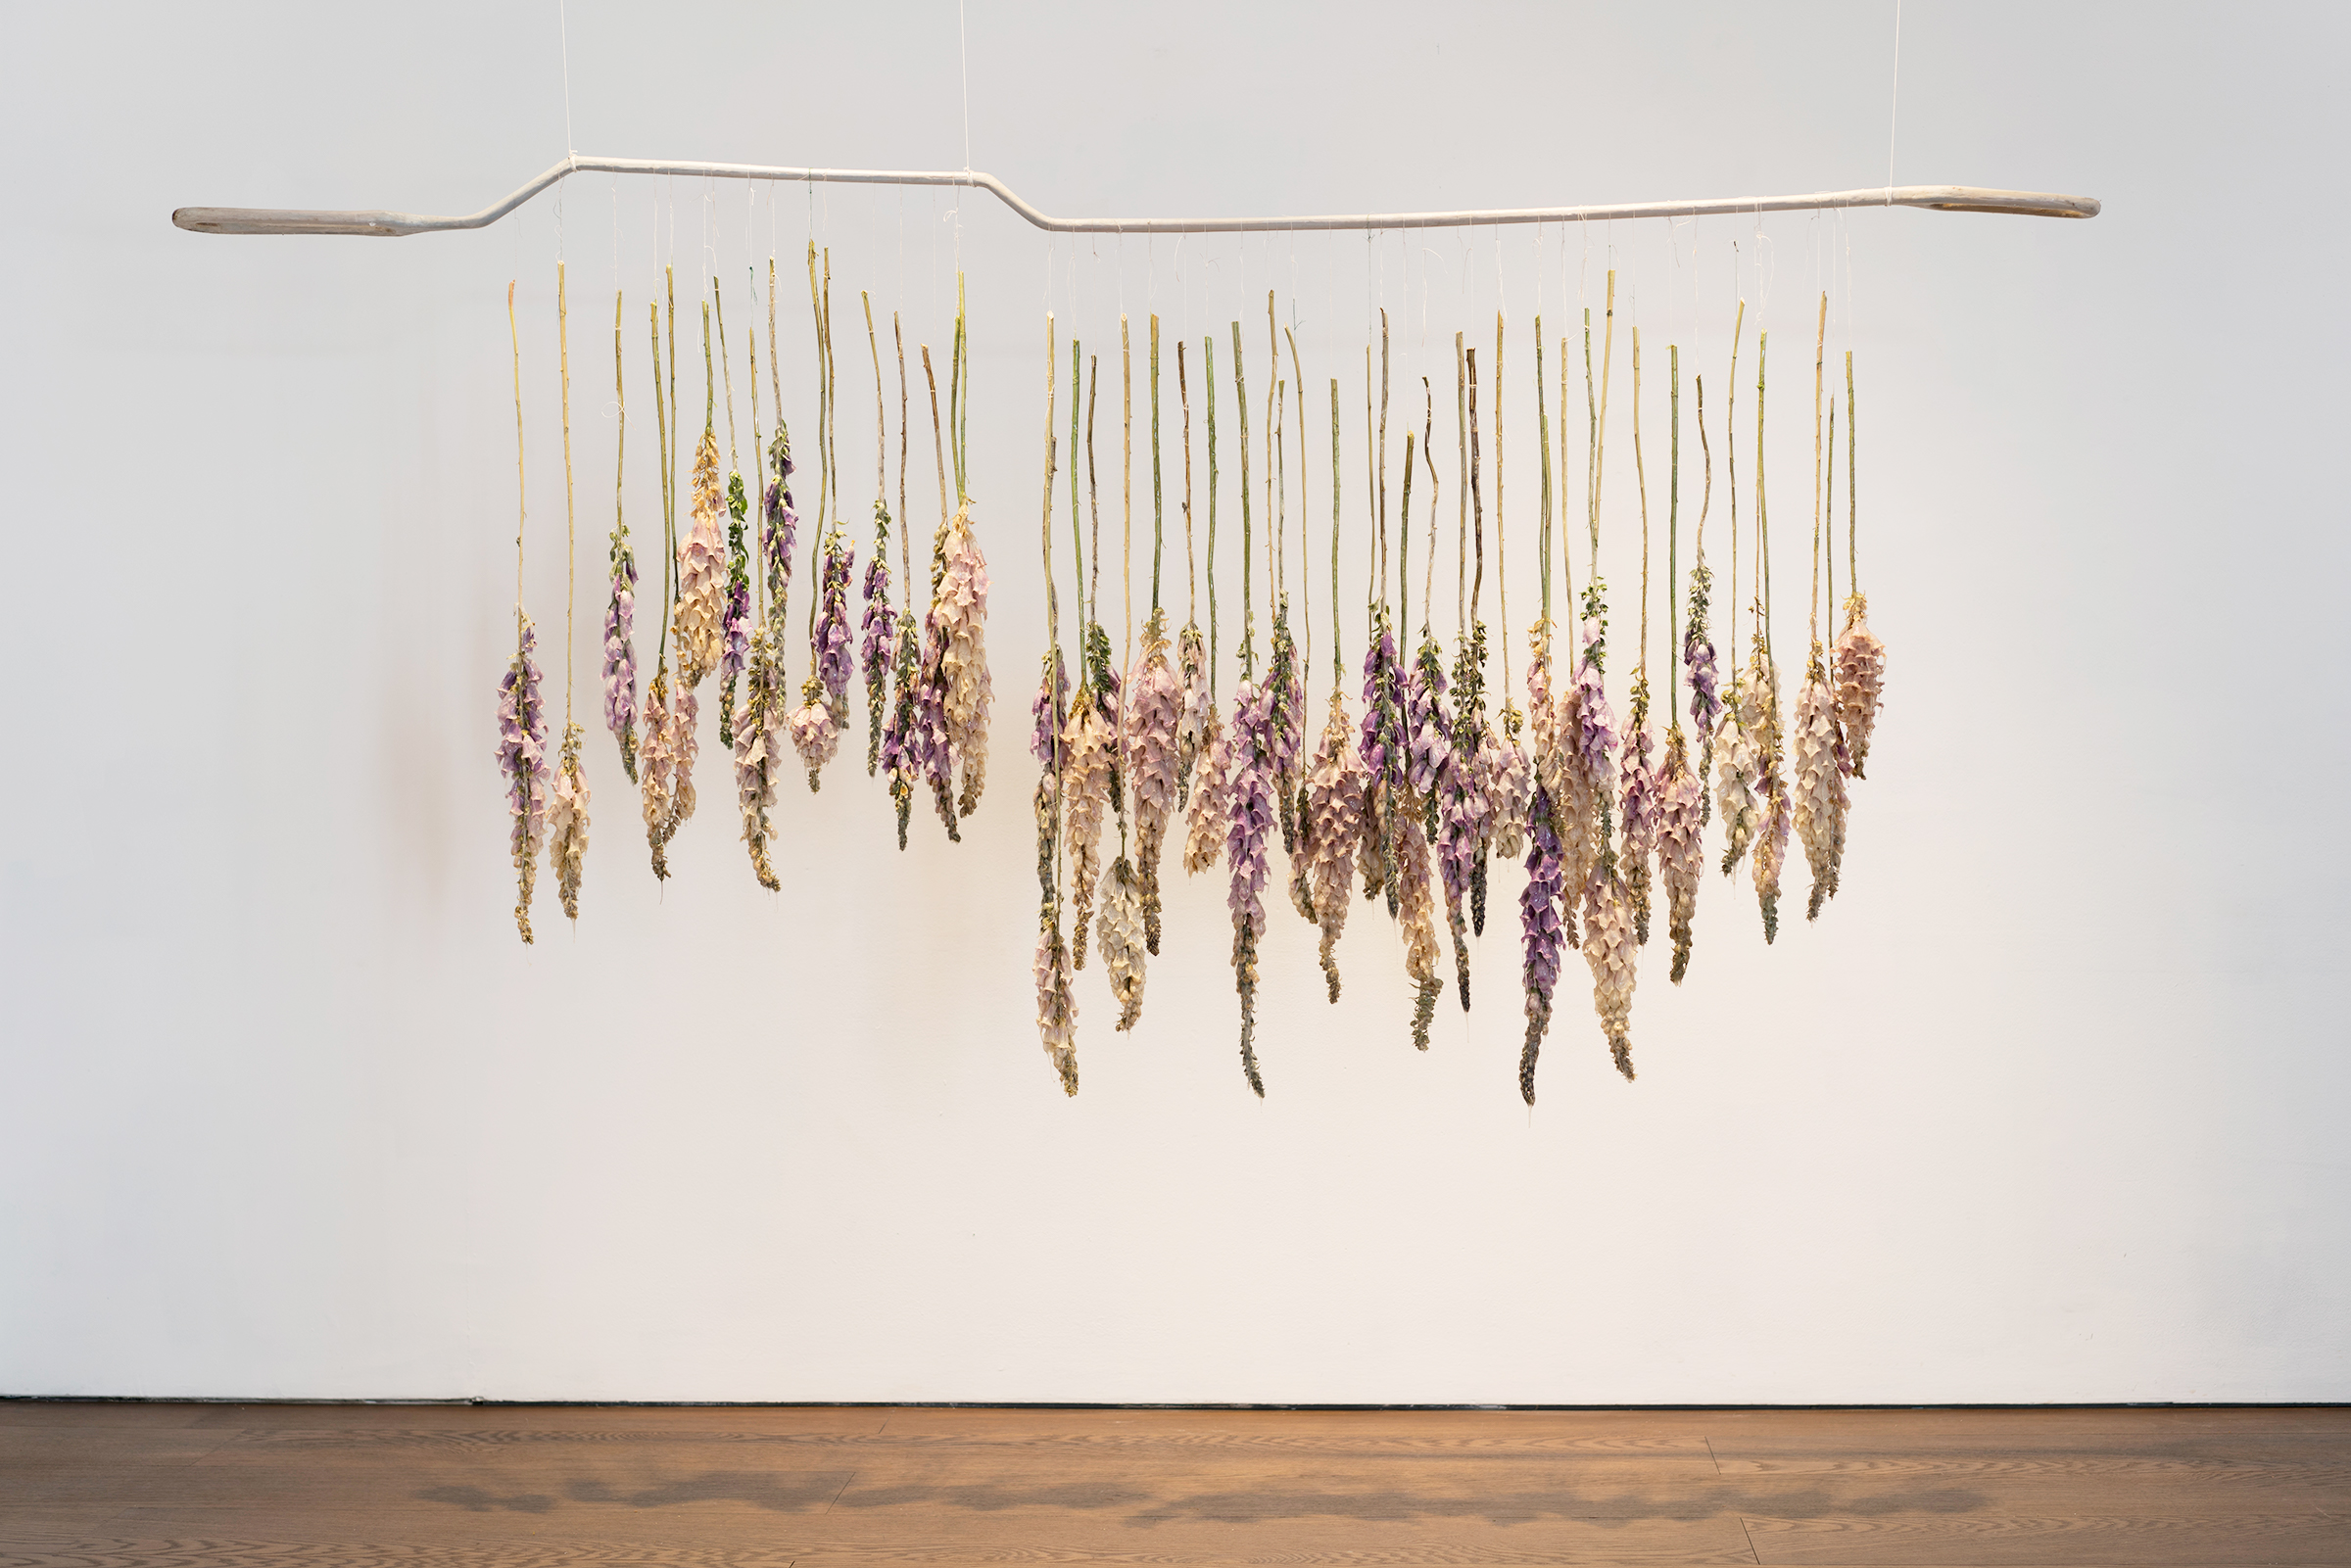 Miriam Austin, Solanum at Flowers Gallery, 2017. Installation view